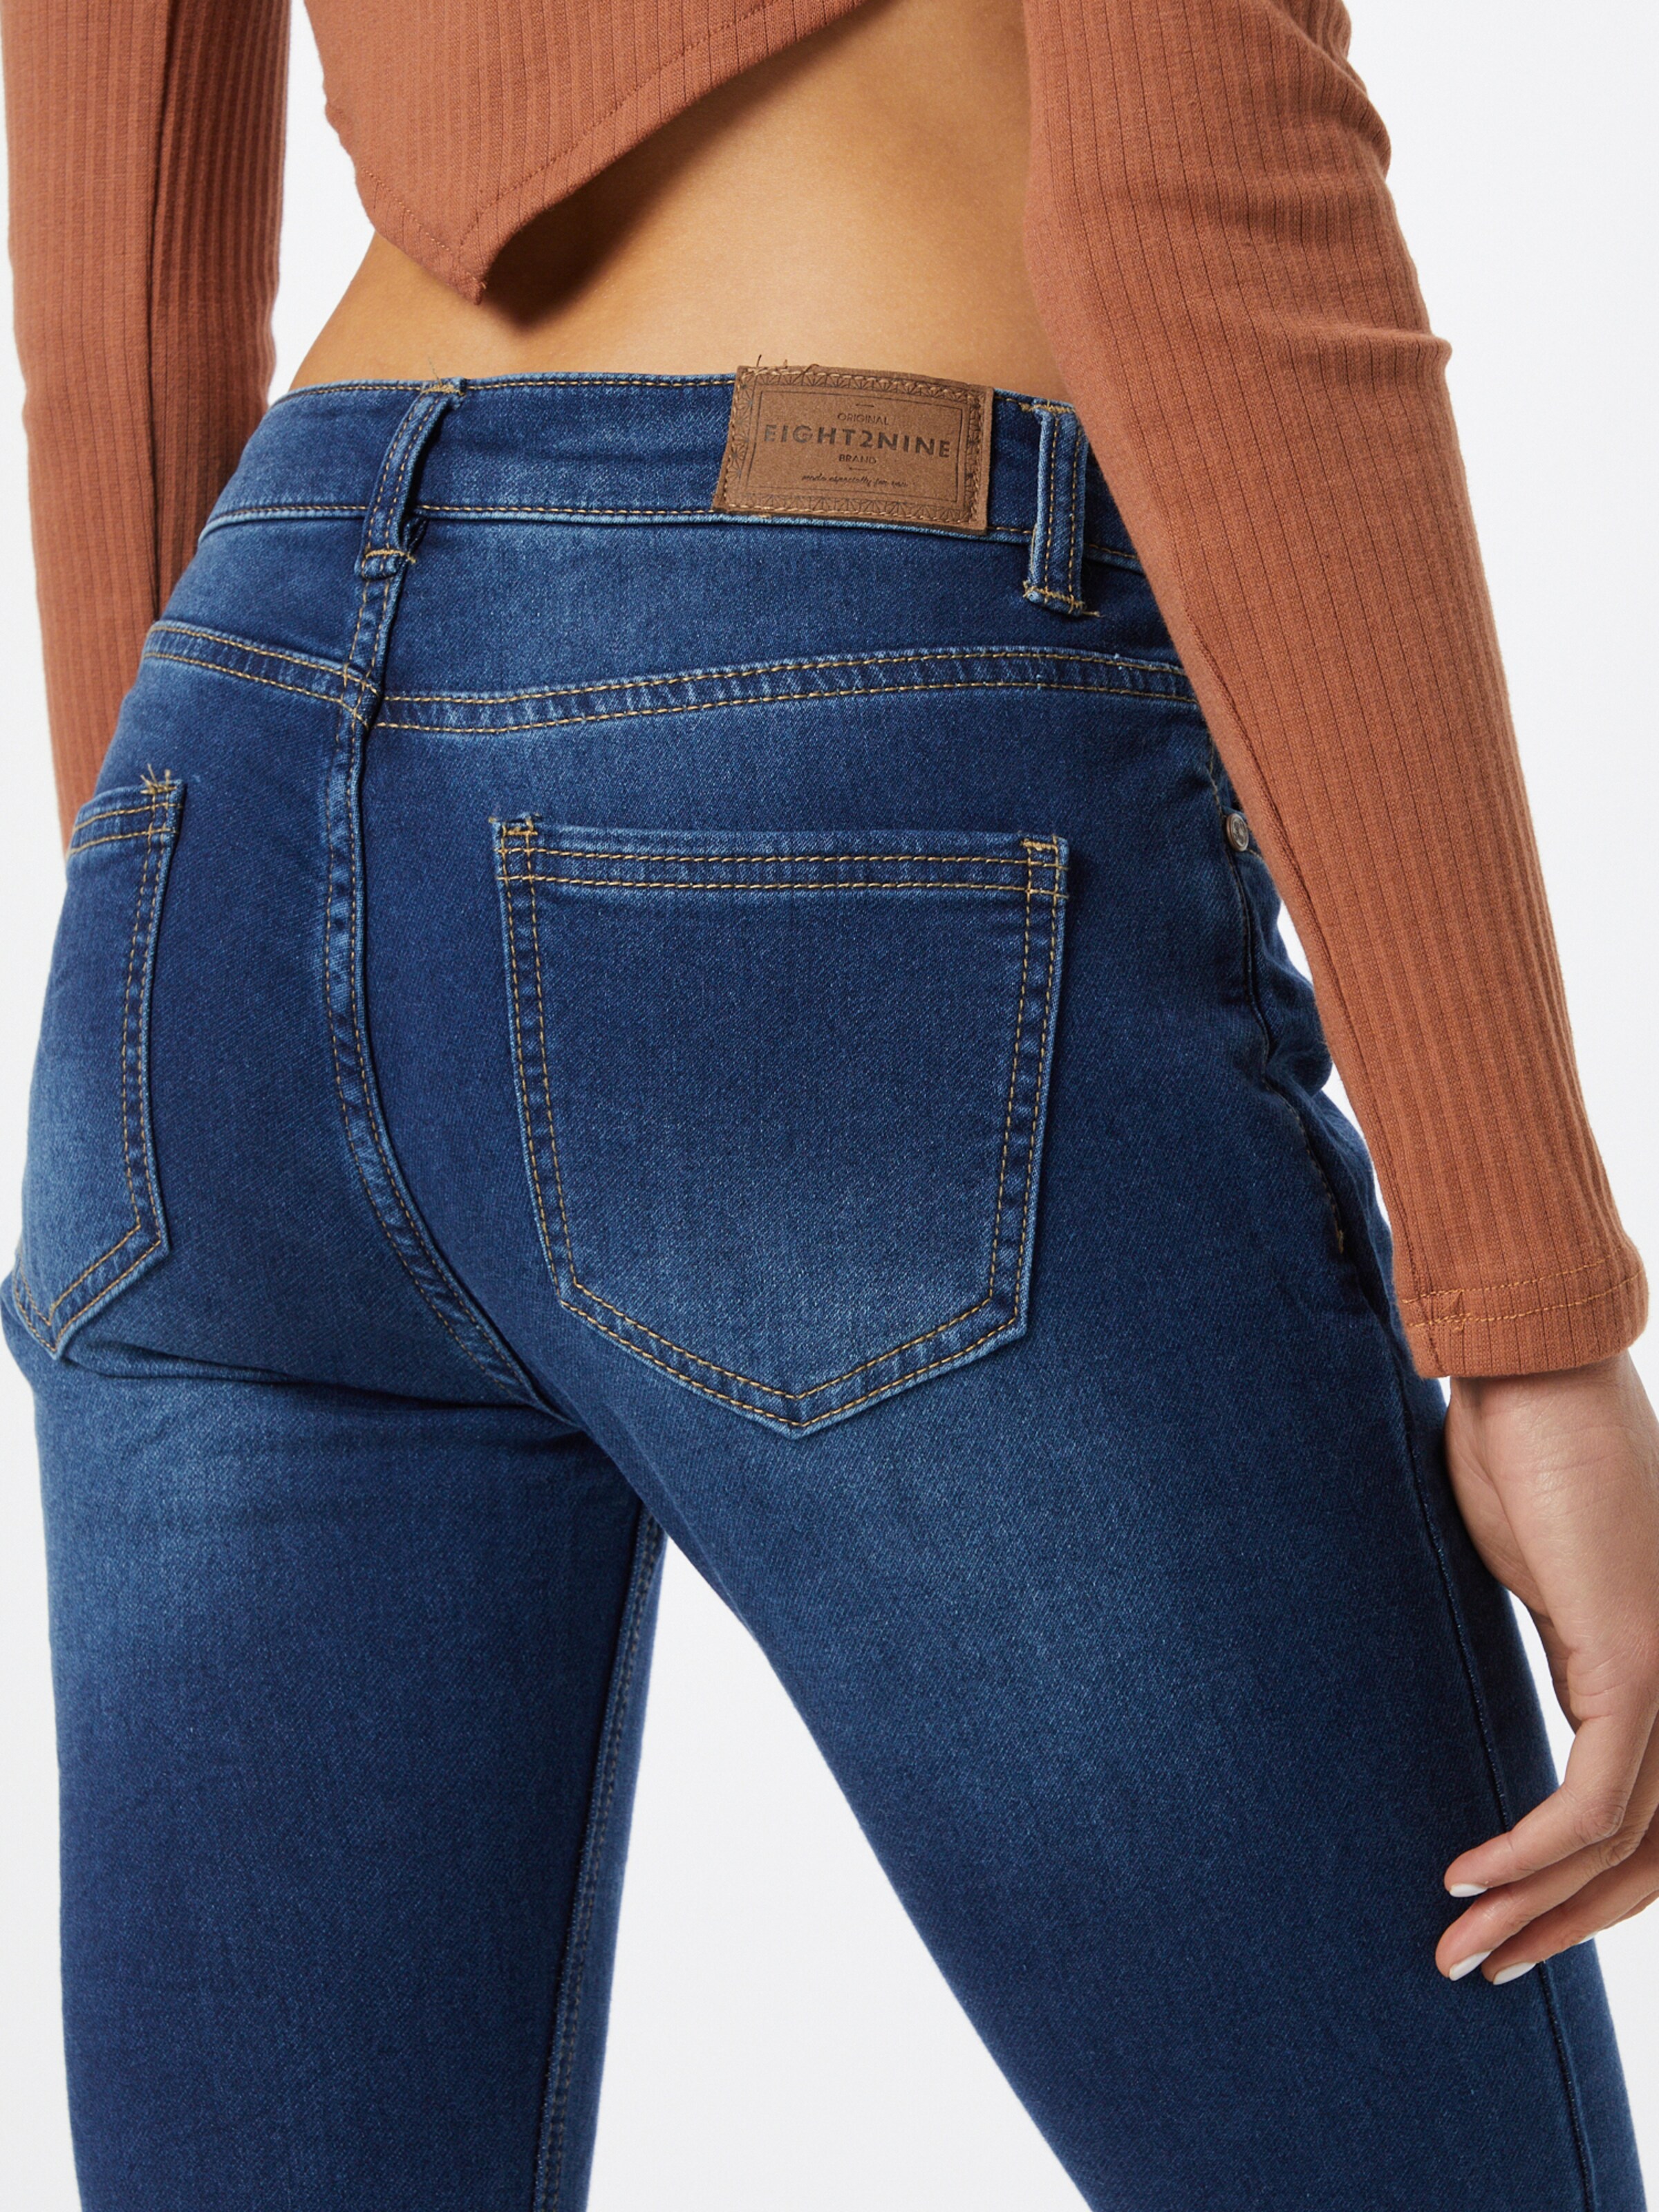 PROMO Donna Eight2Nine Jeans in Blu Scuro 